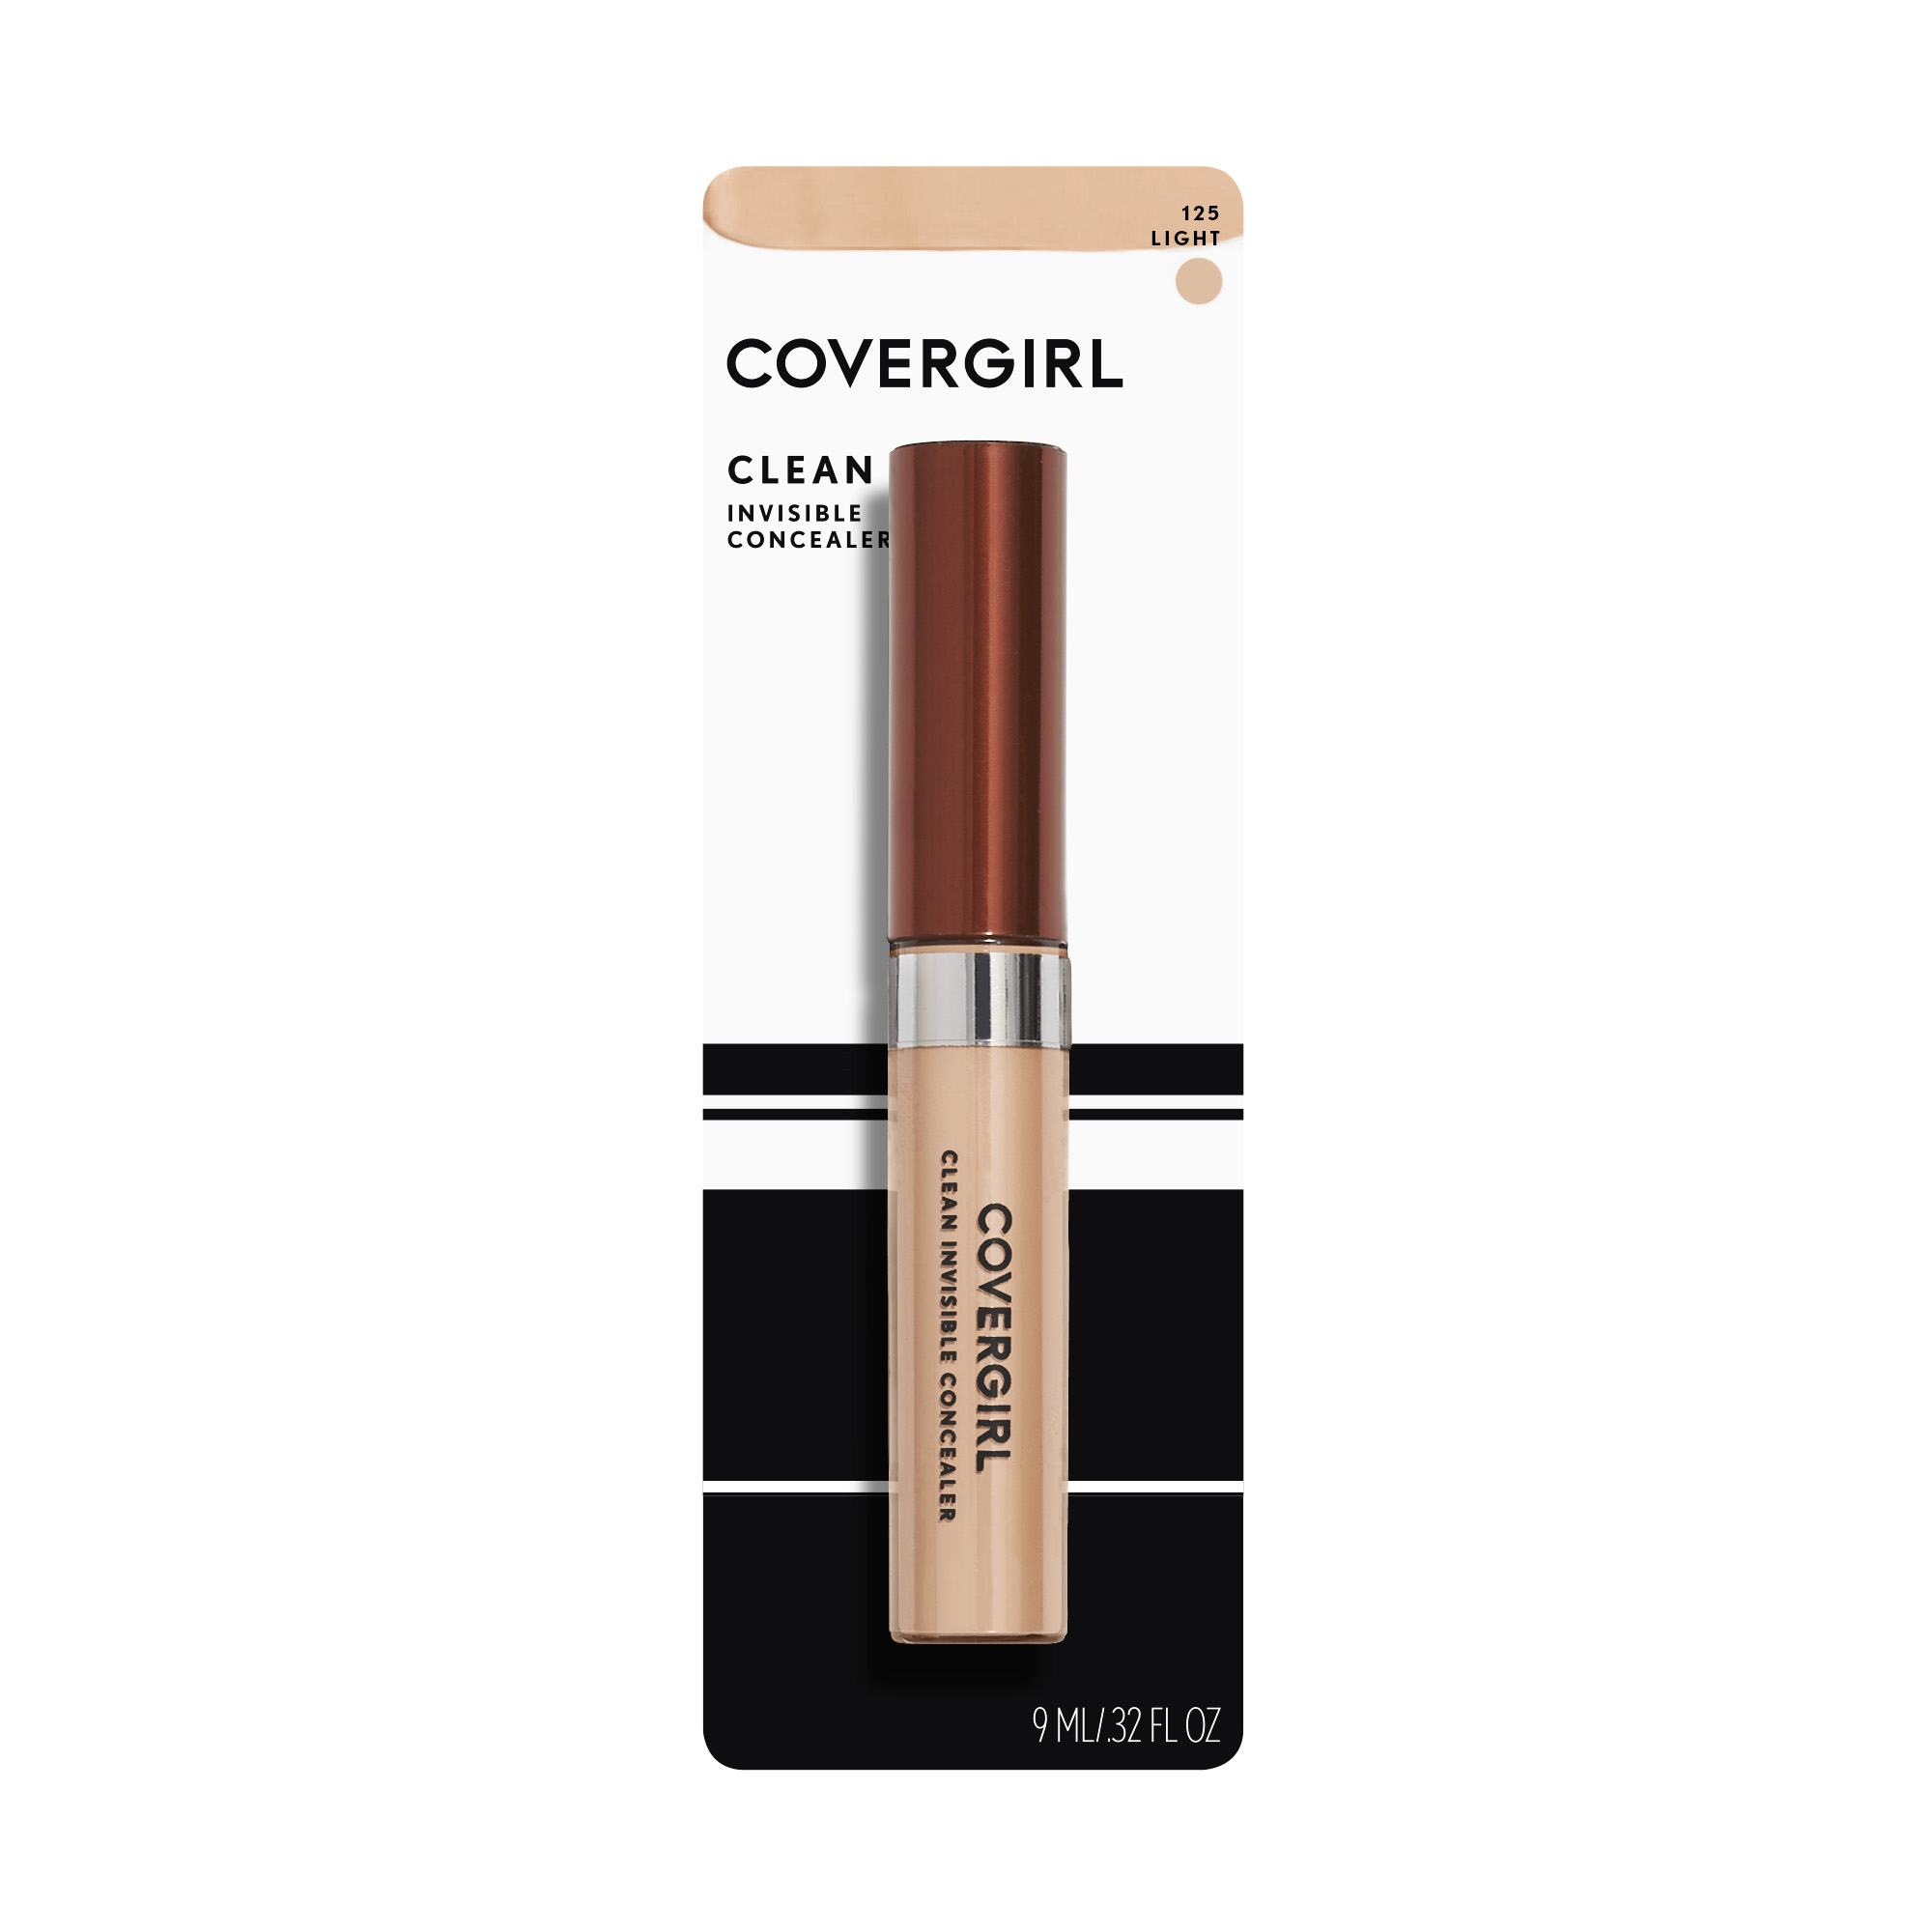 COVERGIRL Clean Invisible Lightweight Concealer, 125 Light, 0.32 oz, Concealer Makeup, Concealer for Dark Circles, Under Eye Concealer, Full Coverage Concealer - image 4 of 4